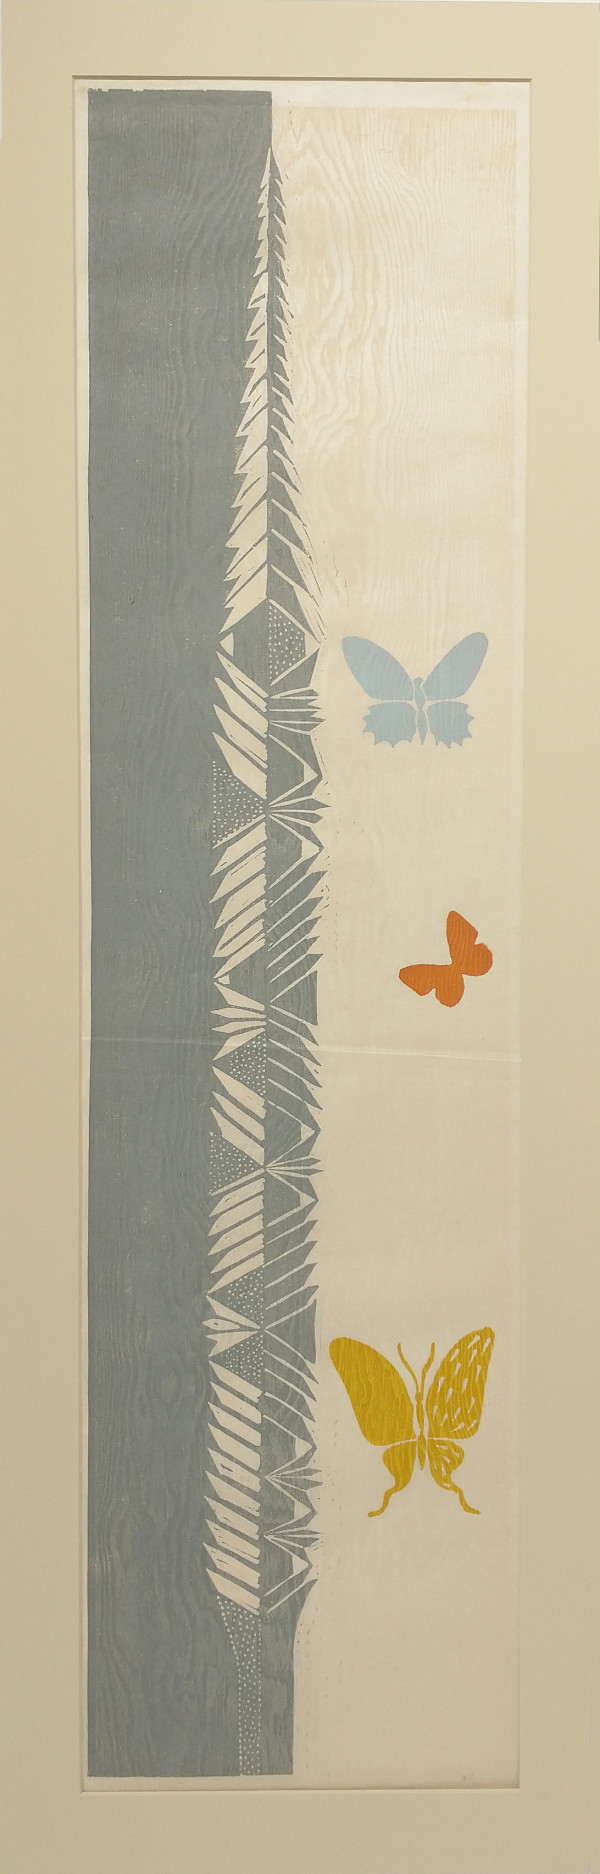 Easter Island Butterflies (3 butterfly version) by Emmy Lou Packard